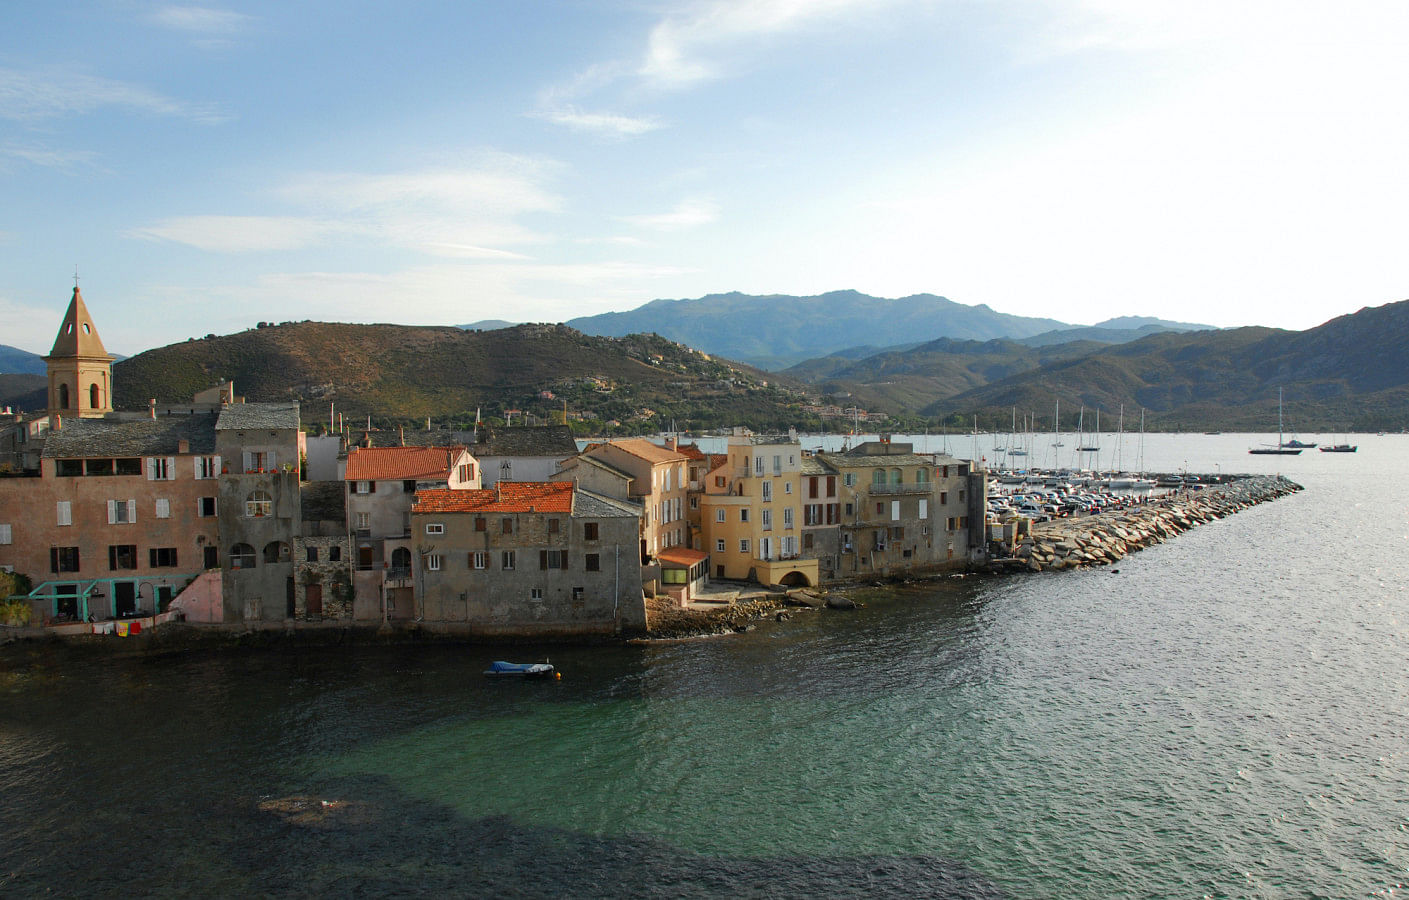 Lej en båd i Korsika